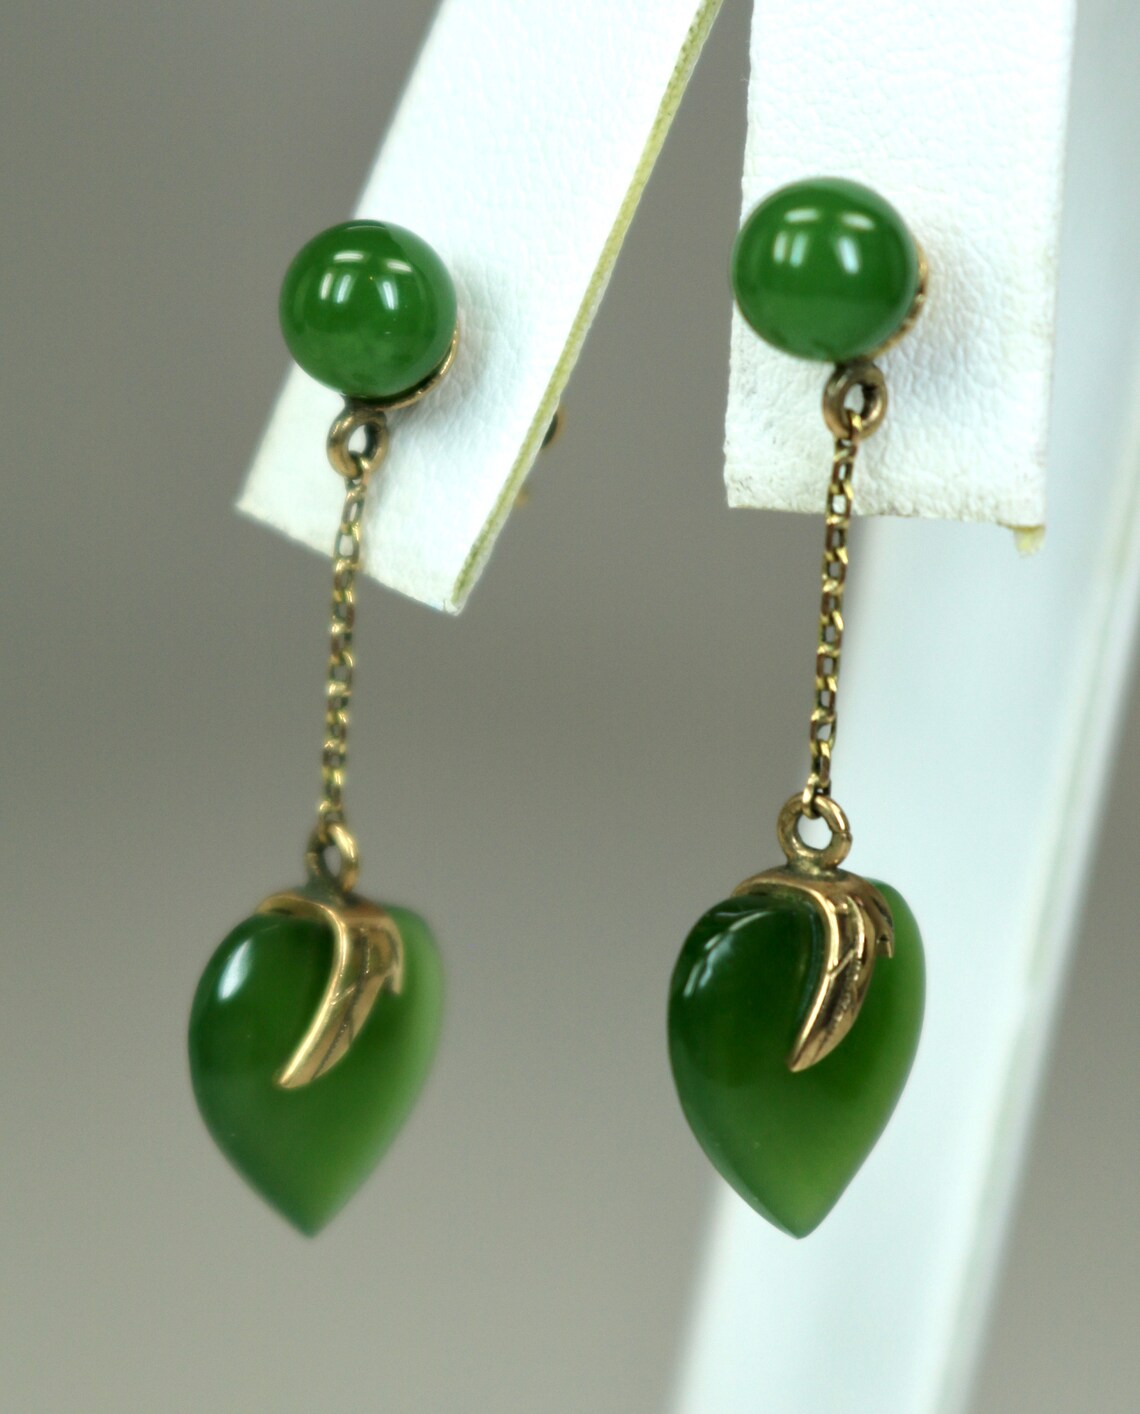 Vintage 14K Rose Gold Earrings with Nephrite Jade Heart Drop | Etsy